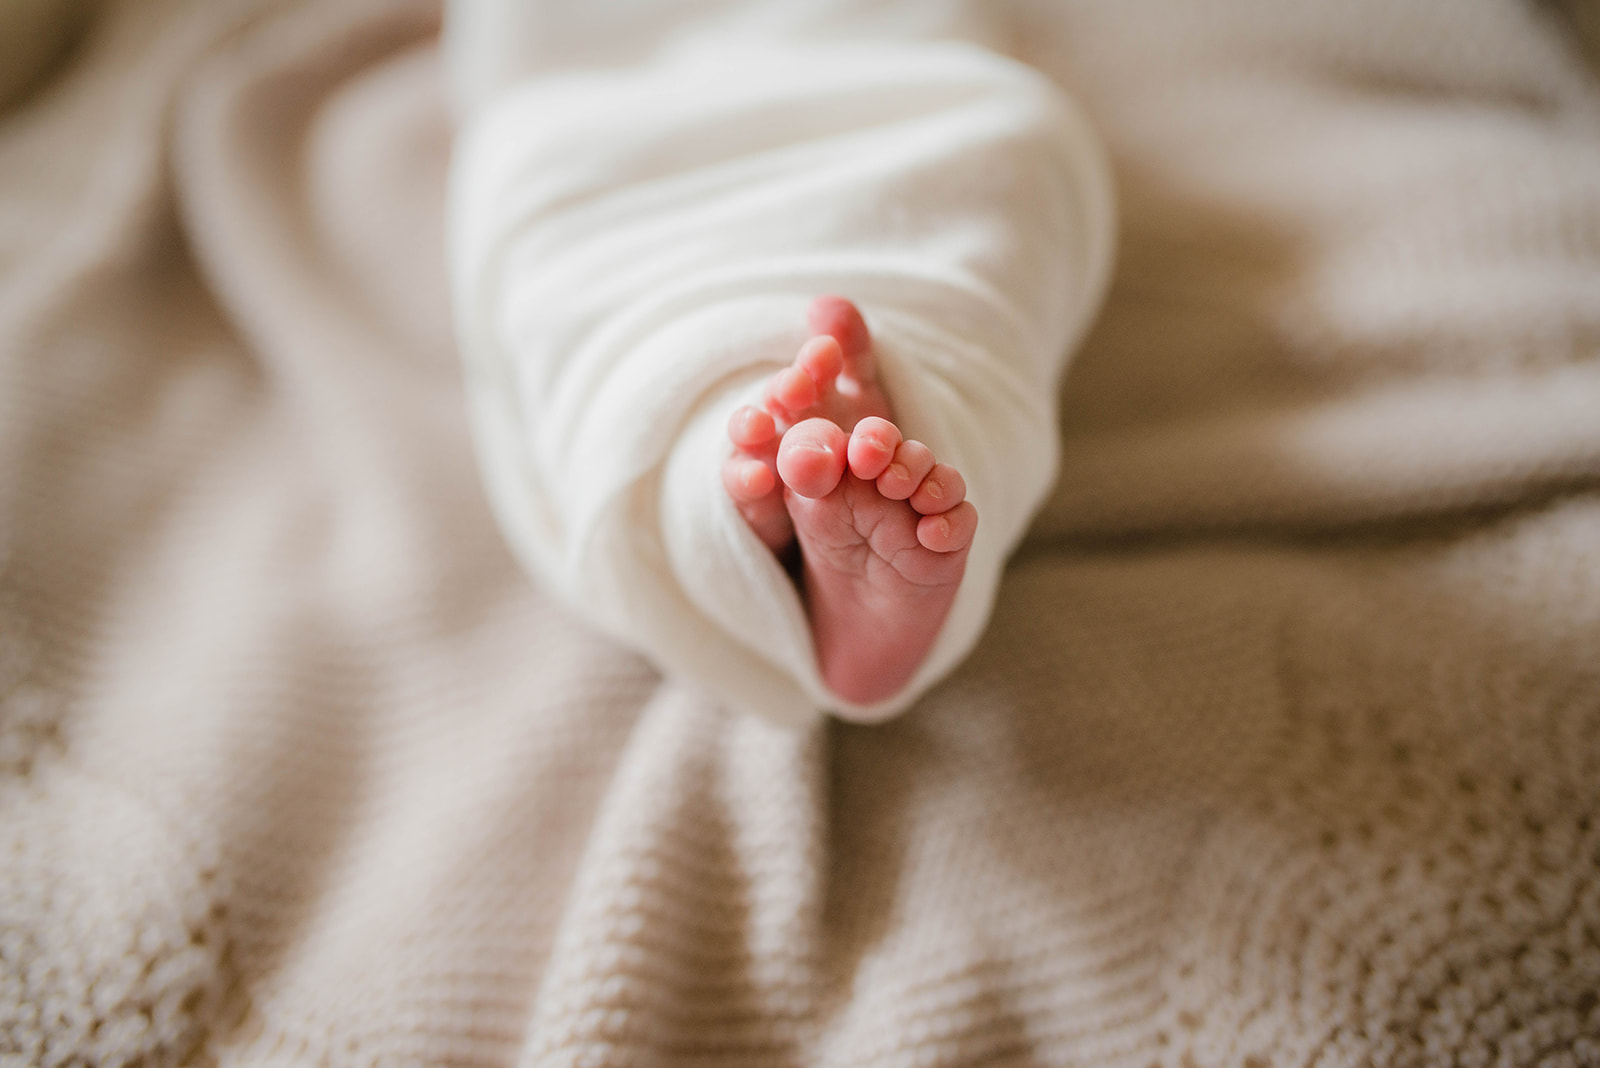 Photograph of newborn baby toes 